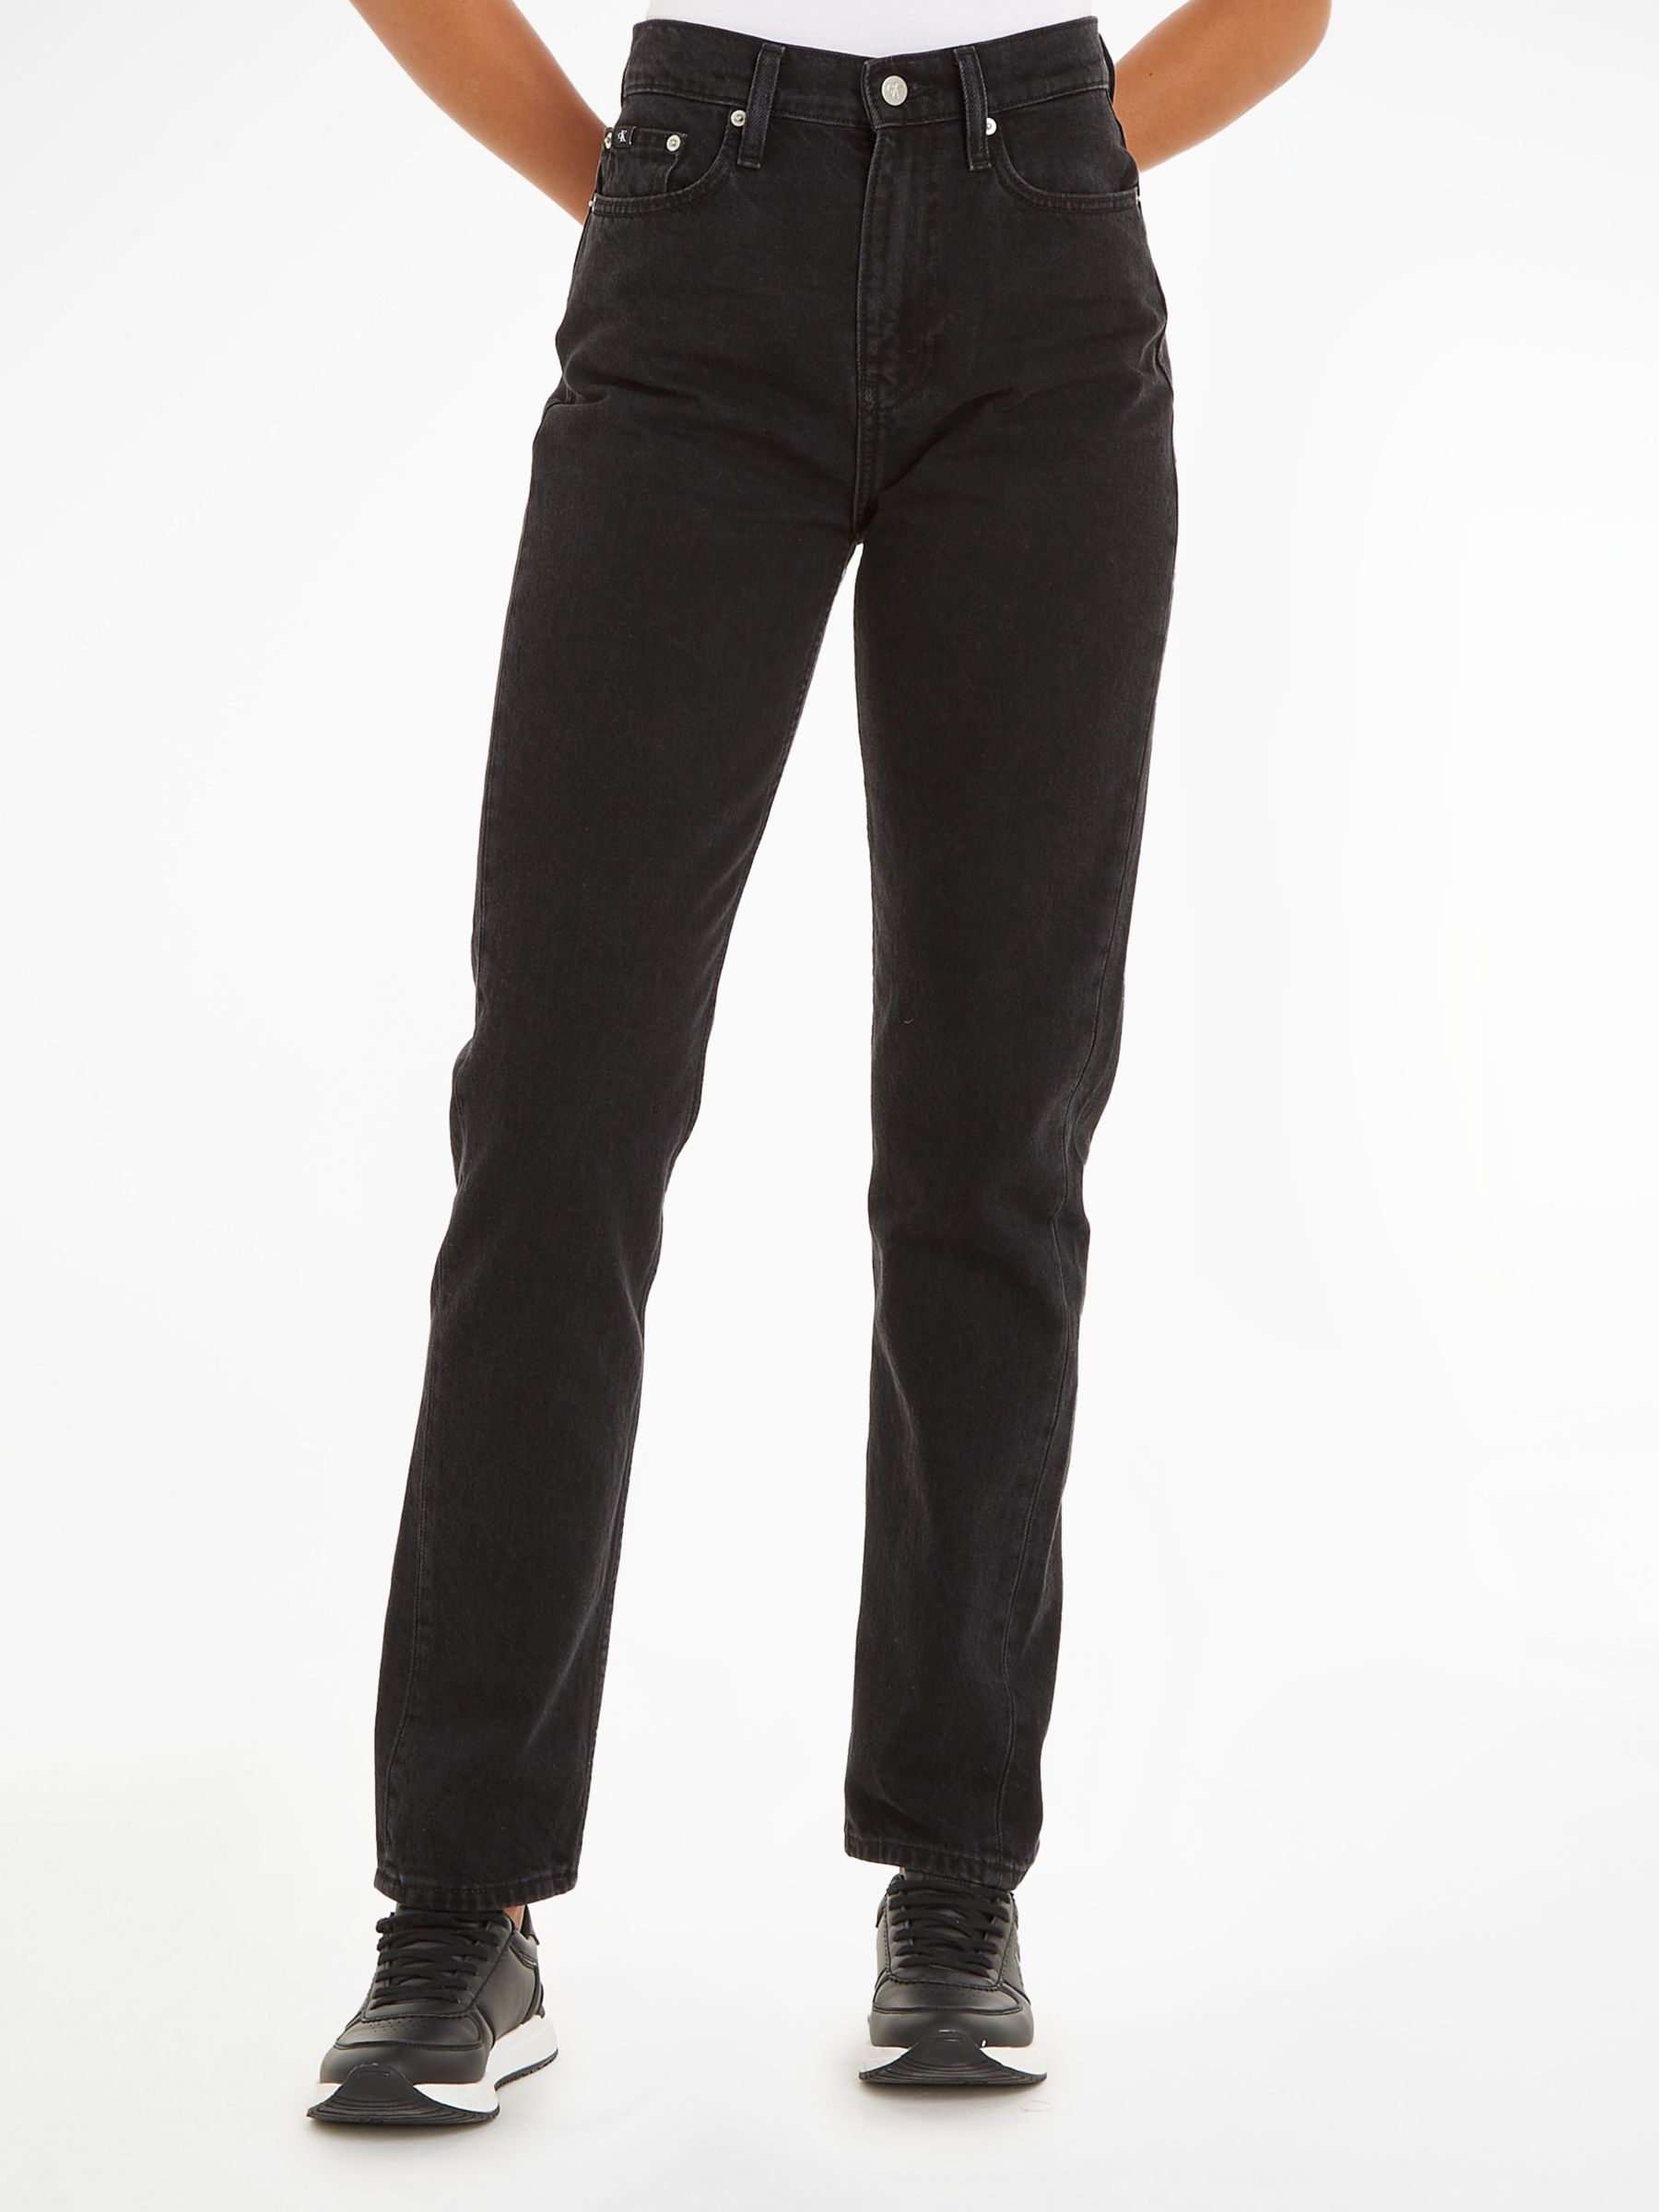 Calvin Klein Plain Slim Fit Straight Cut Jeans, Denim Black, 26R